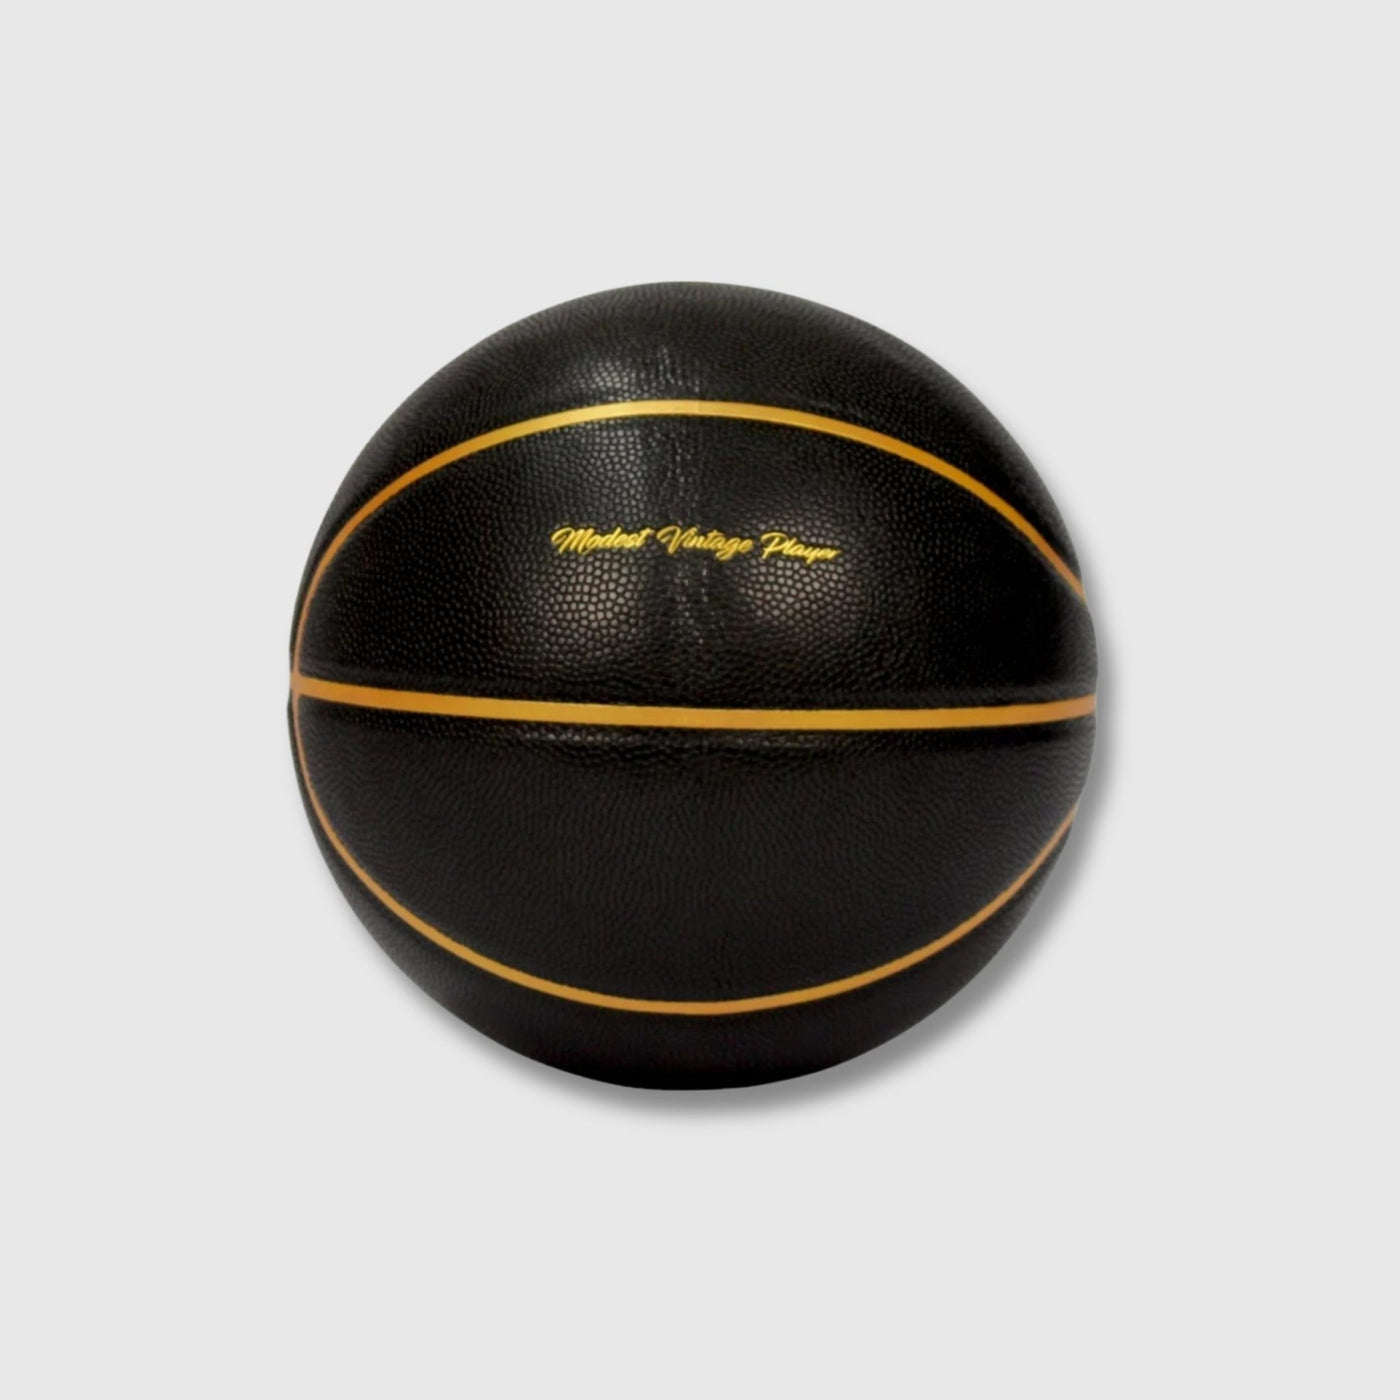 Black / Gold Leather Basketball - Limited Edition - MODEST VINTAGE PLAYER LTD